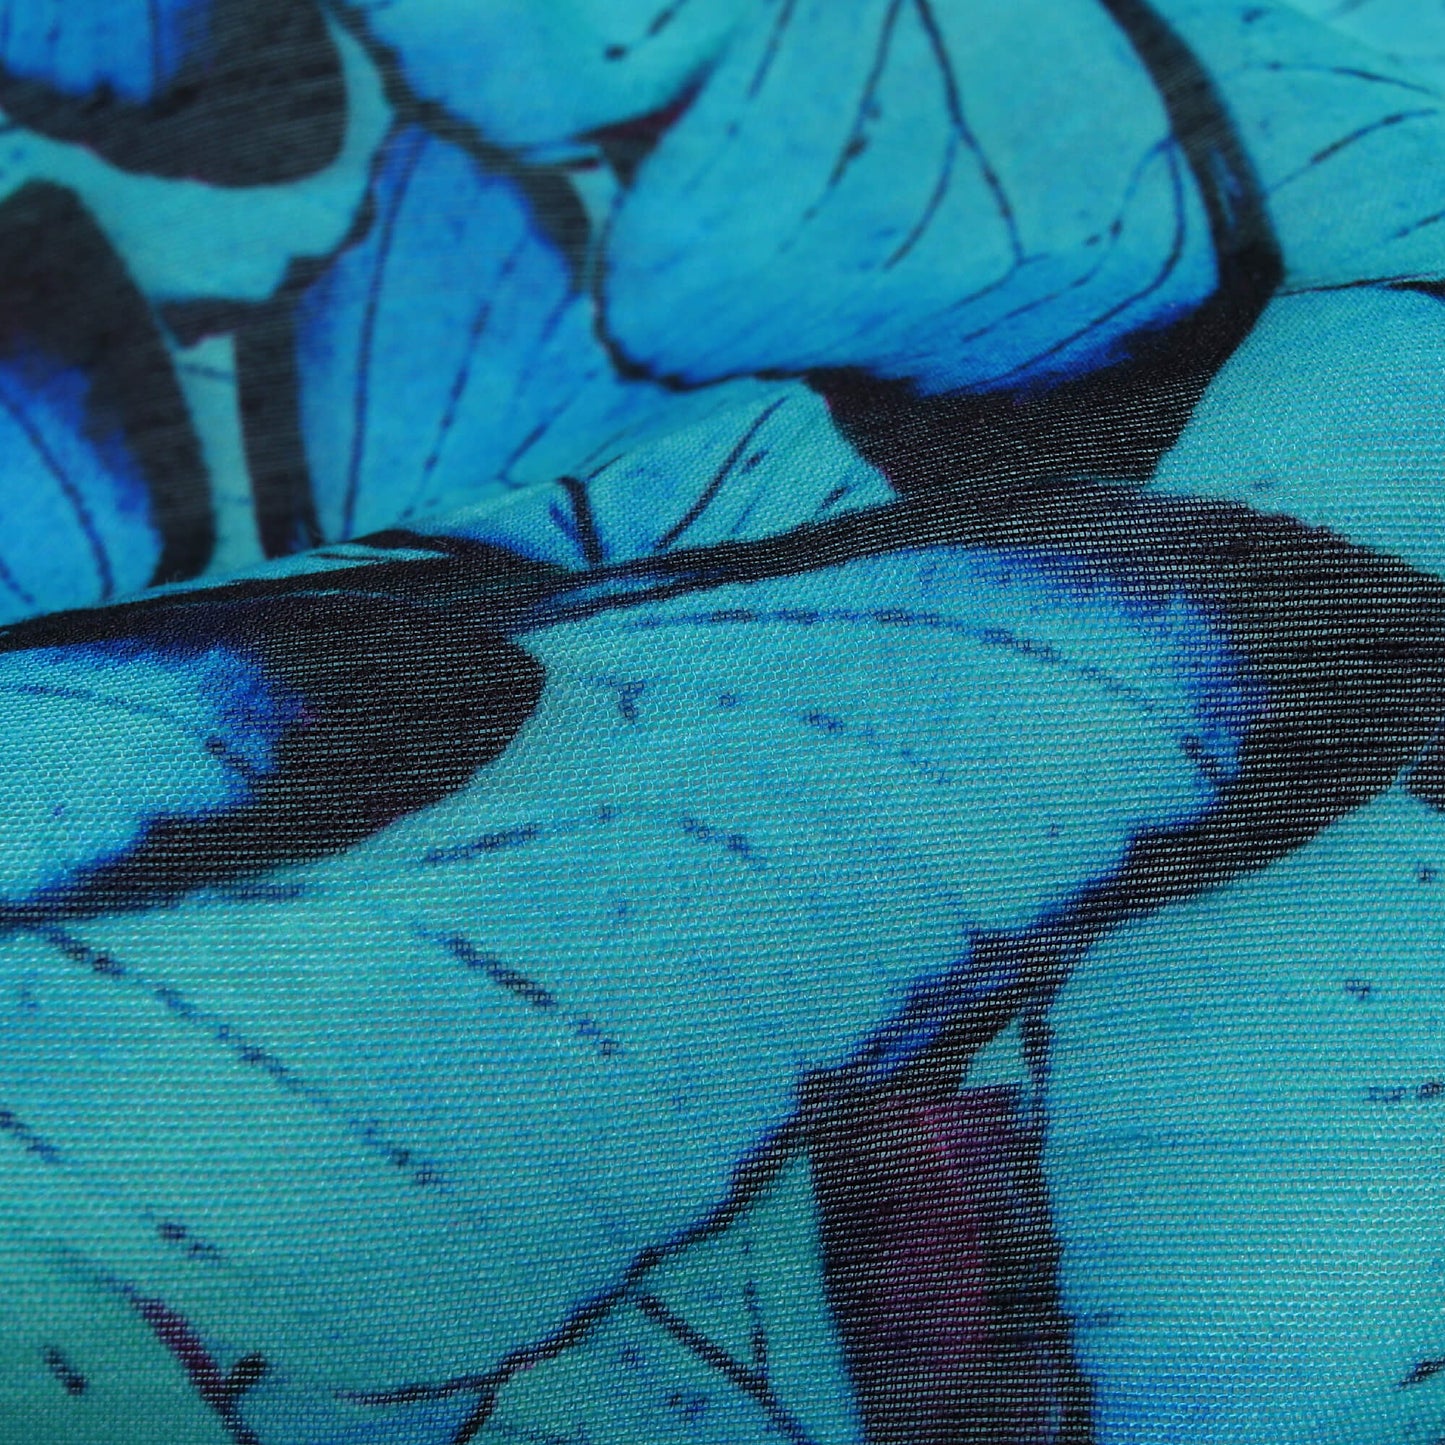 Cyan Blue And Black Butterfly Pattern Digital Print Chanderi Fabric